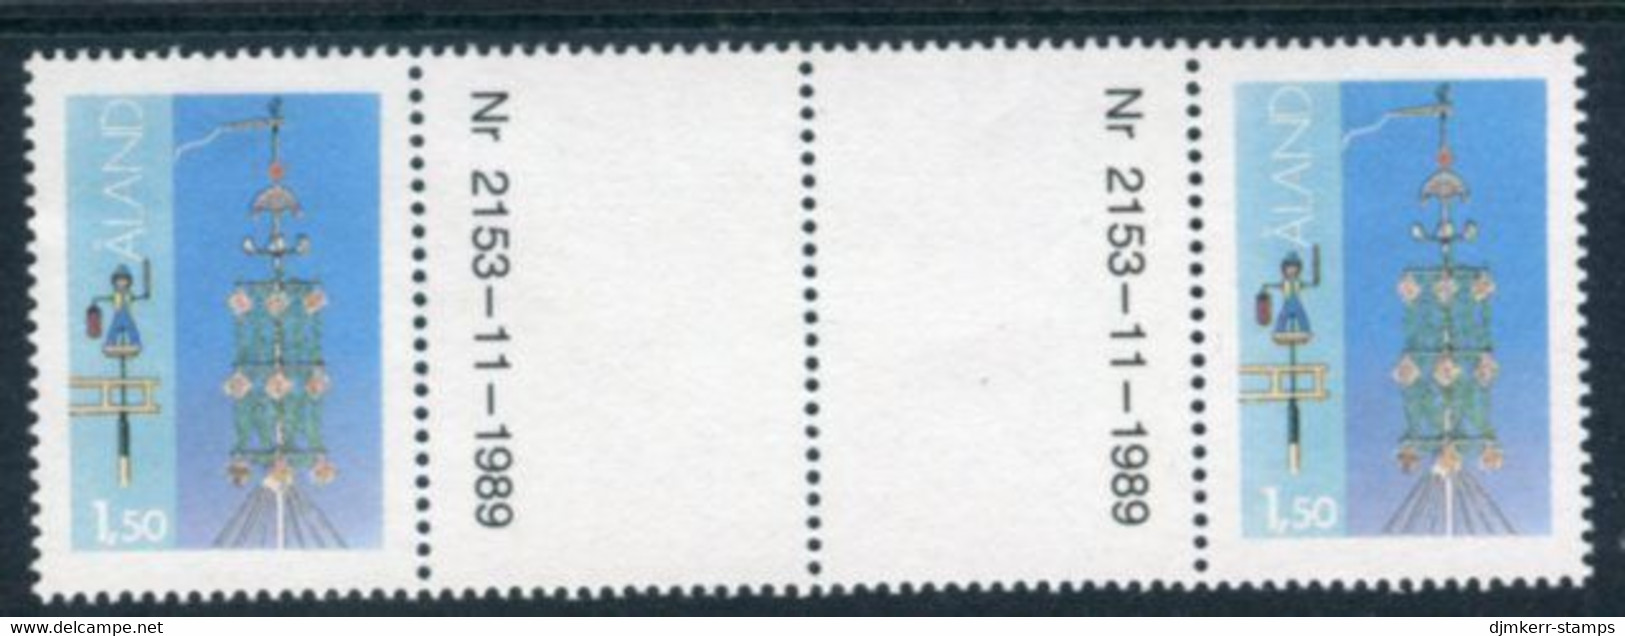 ALAND ISLANDS 1990 Definitive 1.50 M Normal Paper Gutter Pair MNH / **.  Michel 10x - Aland